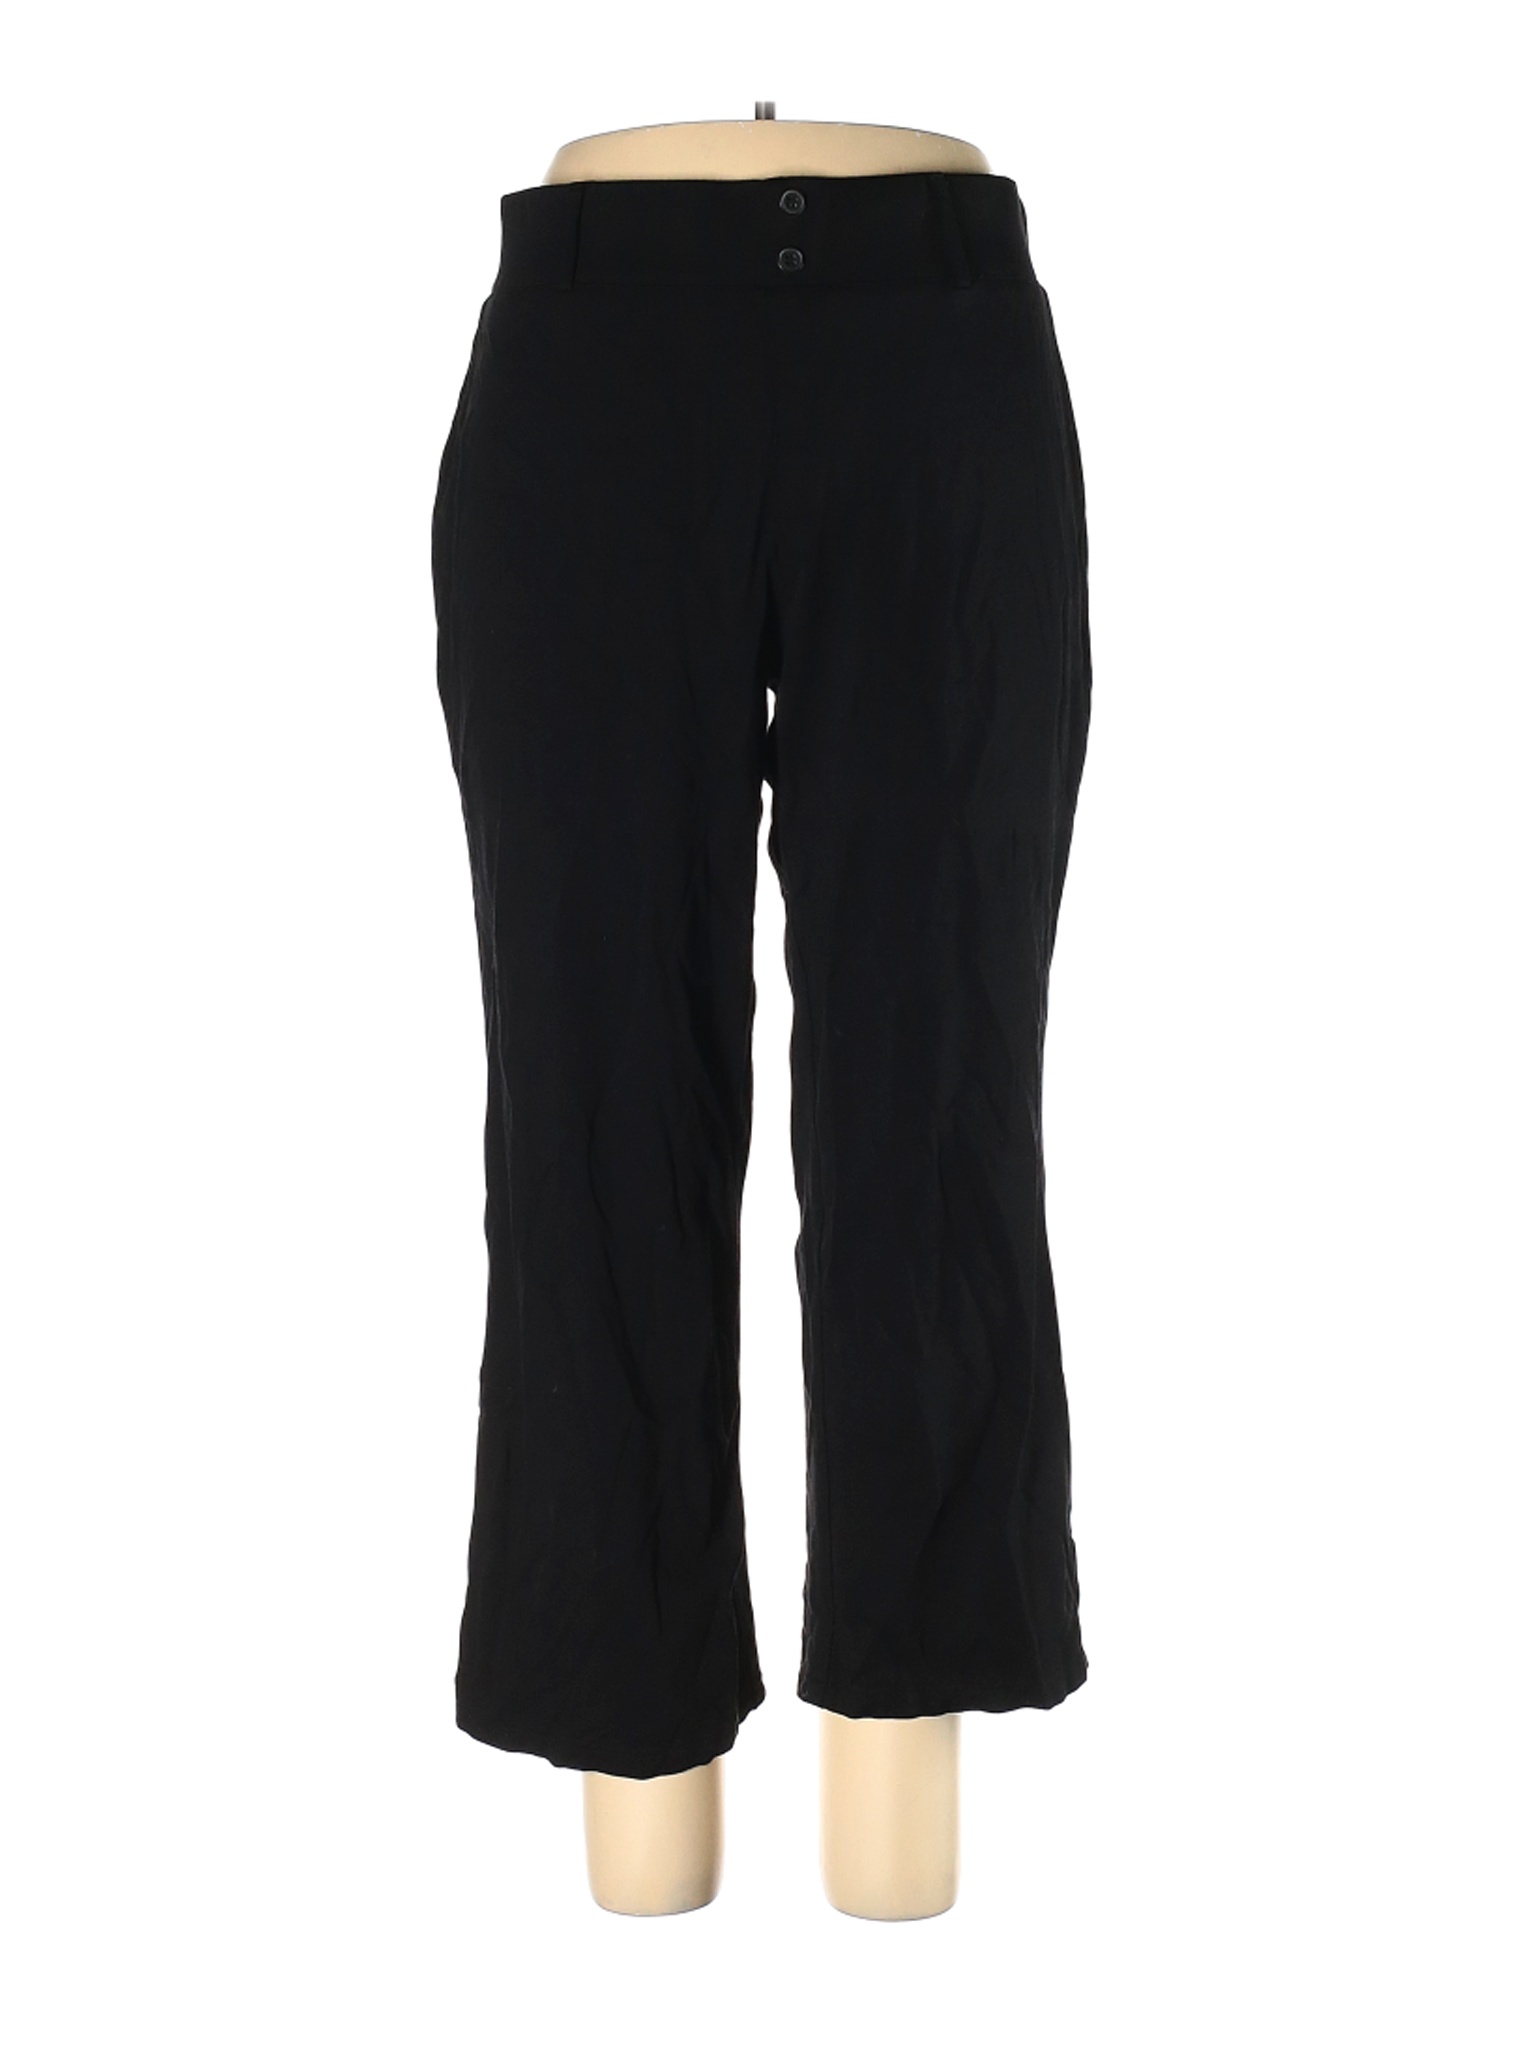 Alyx Women Black Casual Pants 2X Plus | eBay